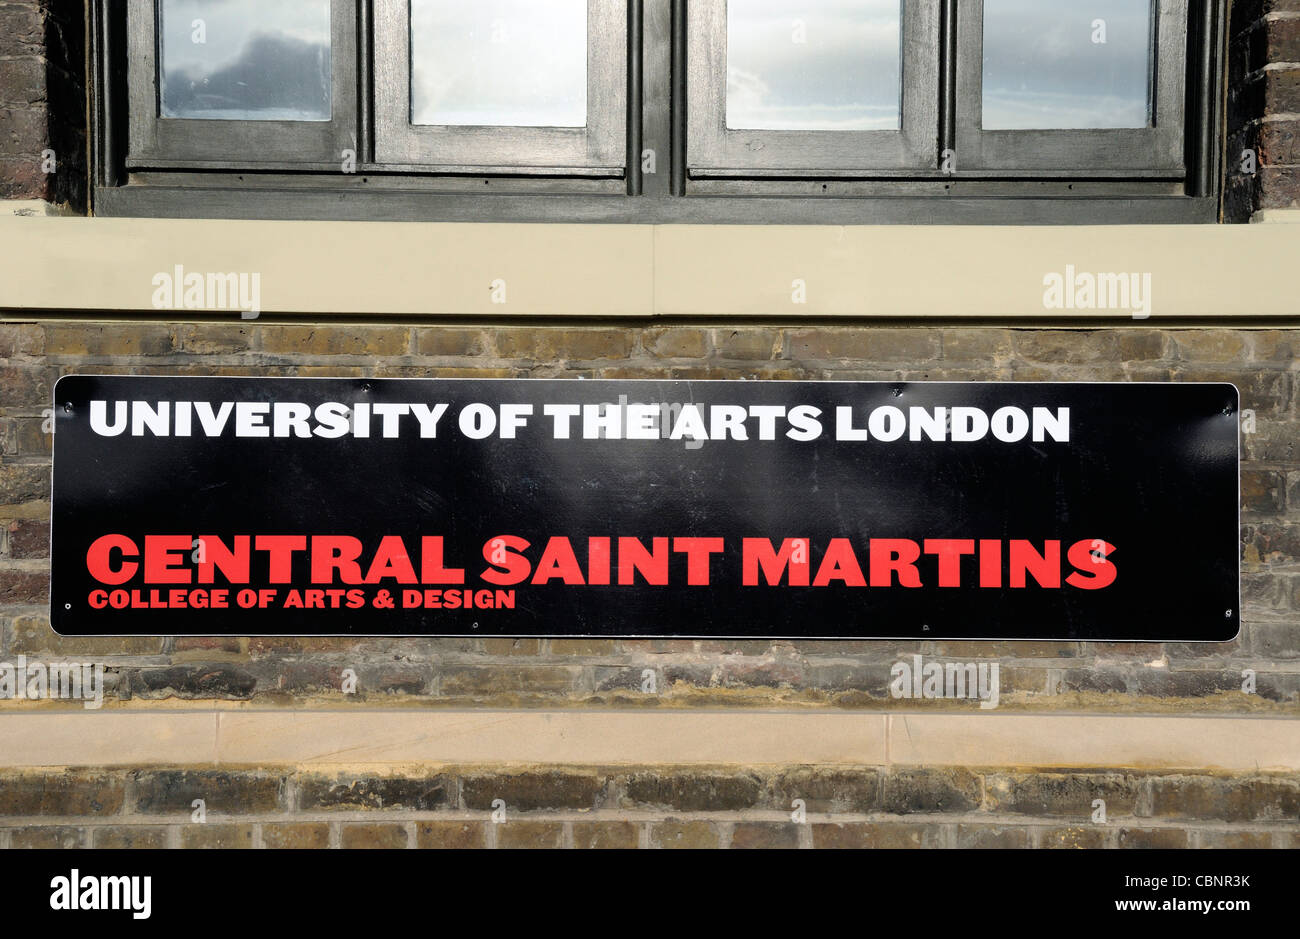 Central Saint Martins, College of Arts & Design University of the Arts à Londres Kings Cross London N1C Central England UK Banque D'Images